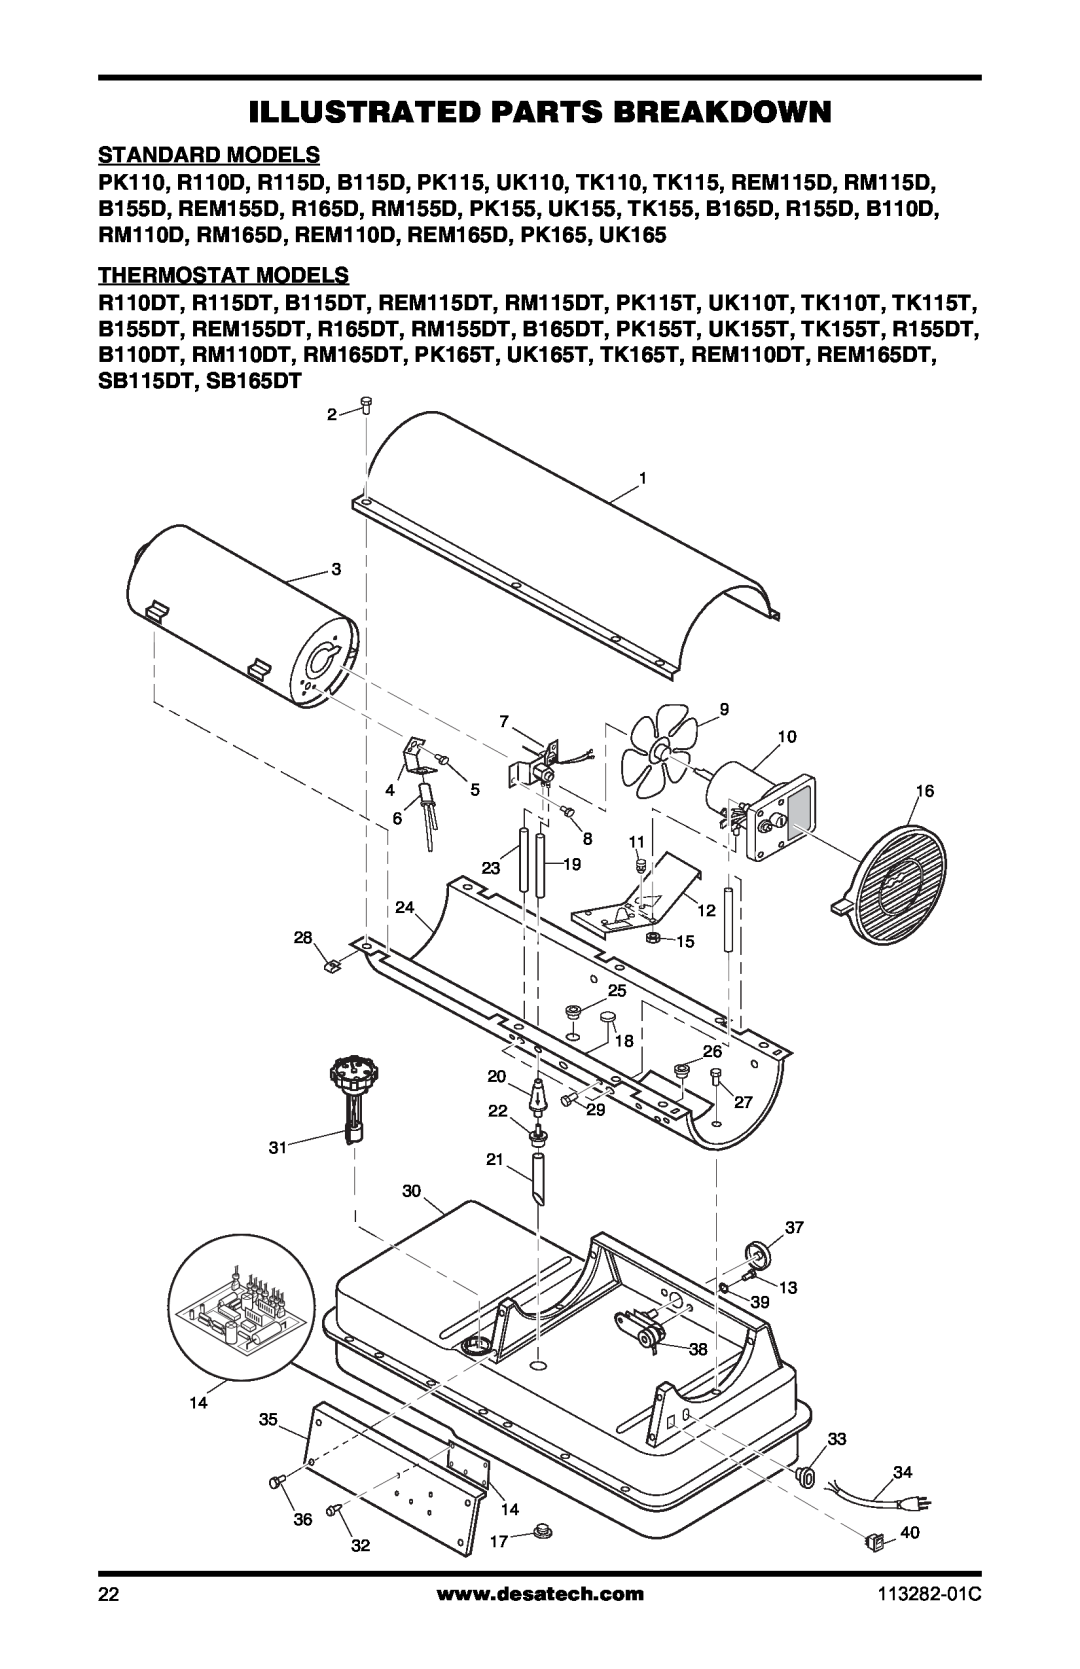 Desa BTU/HR owner manual Illustrated Parts Breakdown, Standard Models 